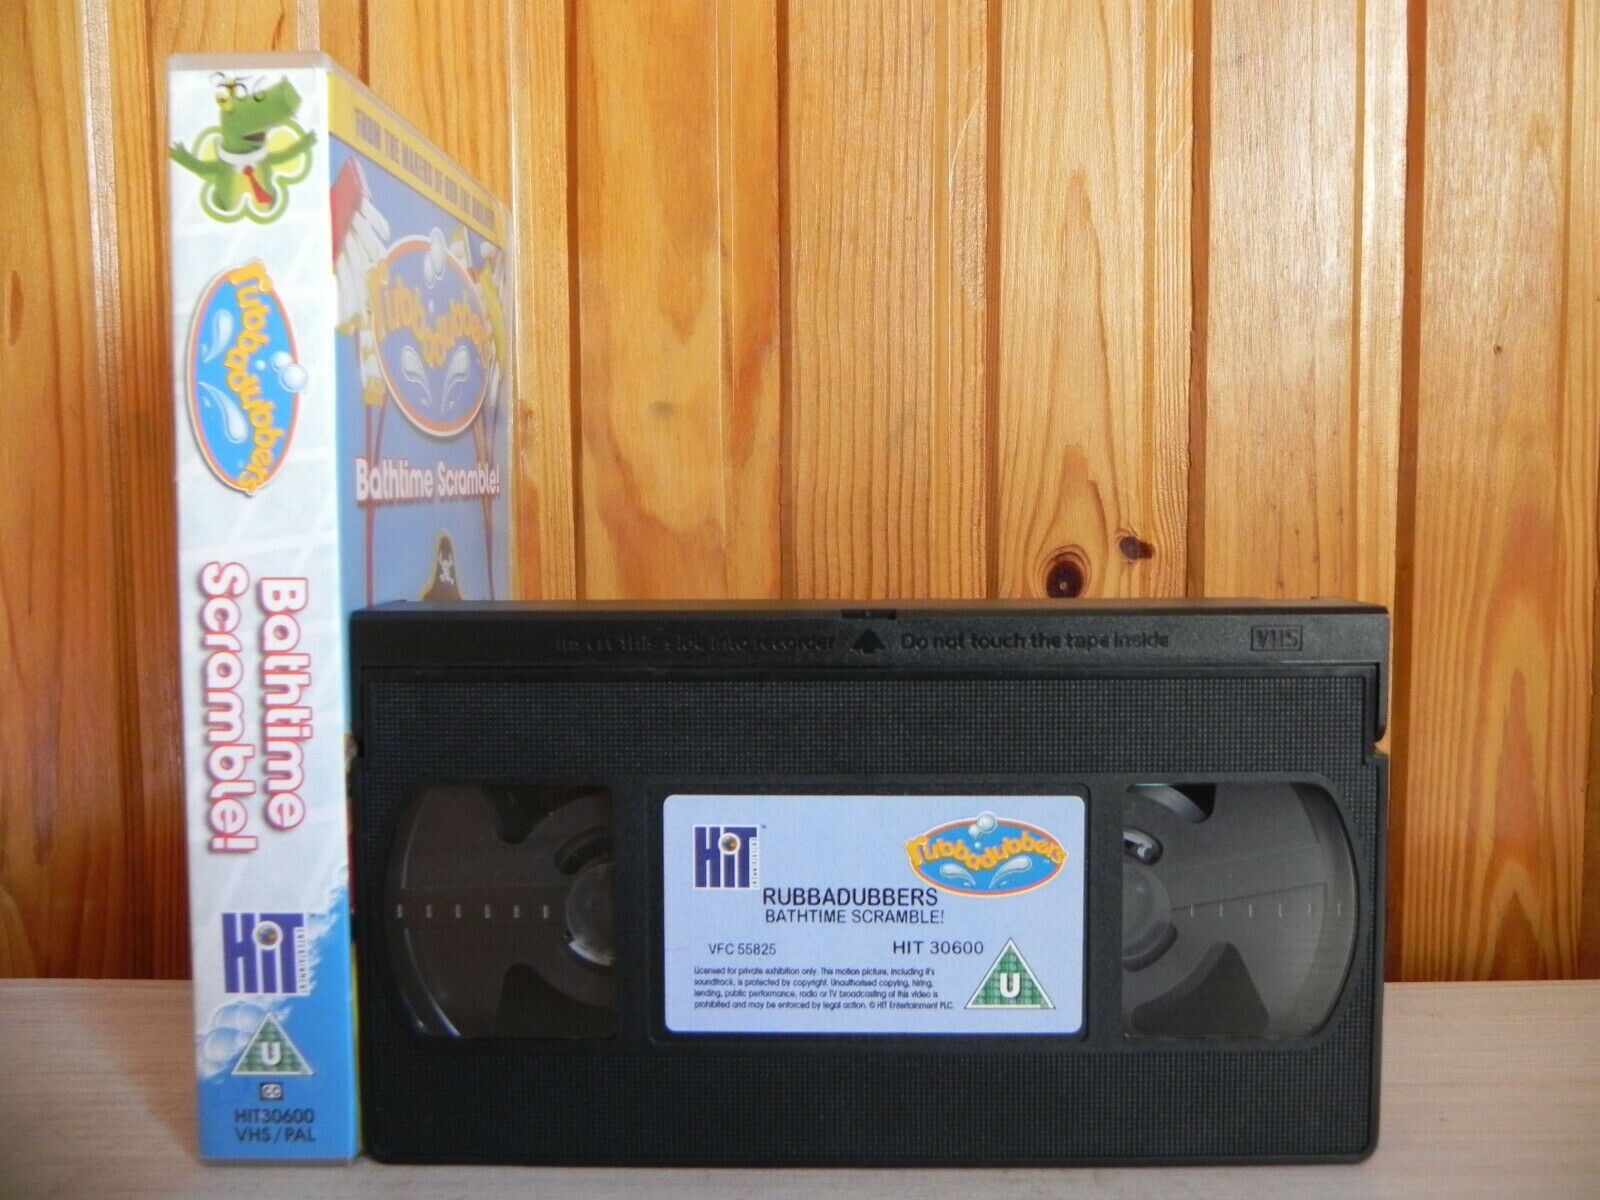 Rubbadubbers: Bathtime Scramble (Bathroom Furniture) Games/Learning Video - VHS-